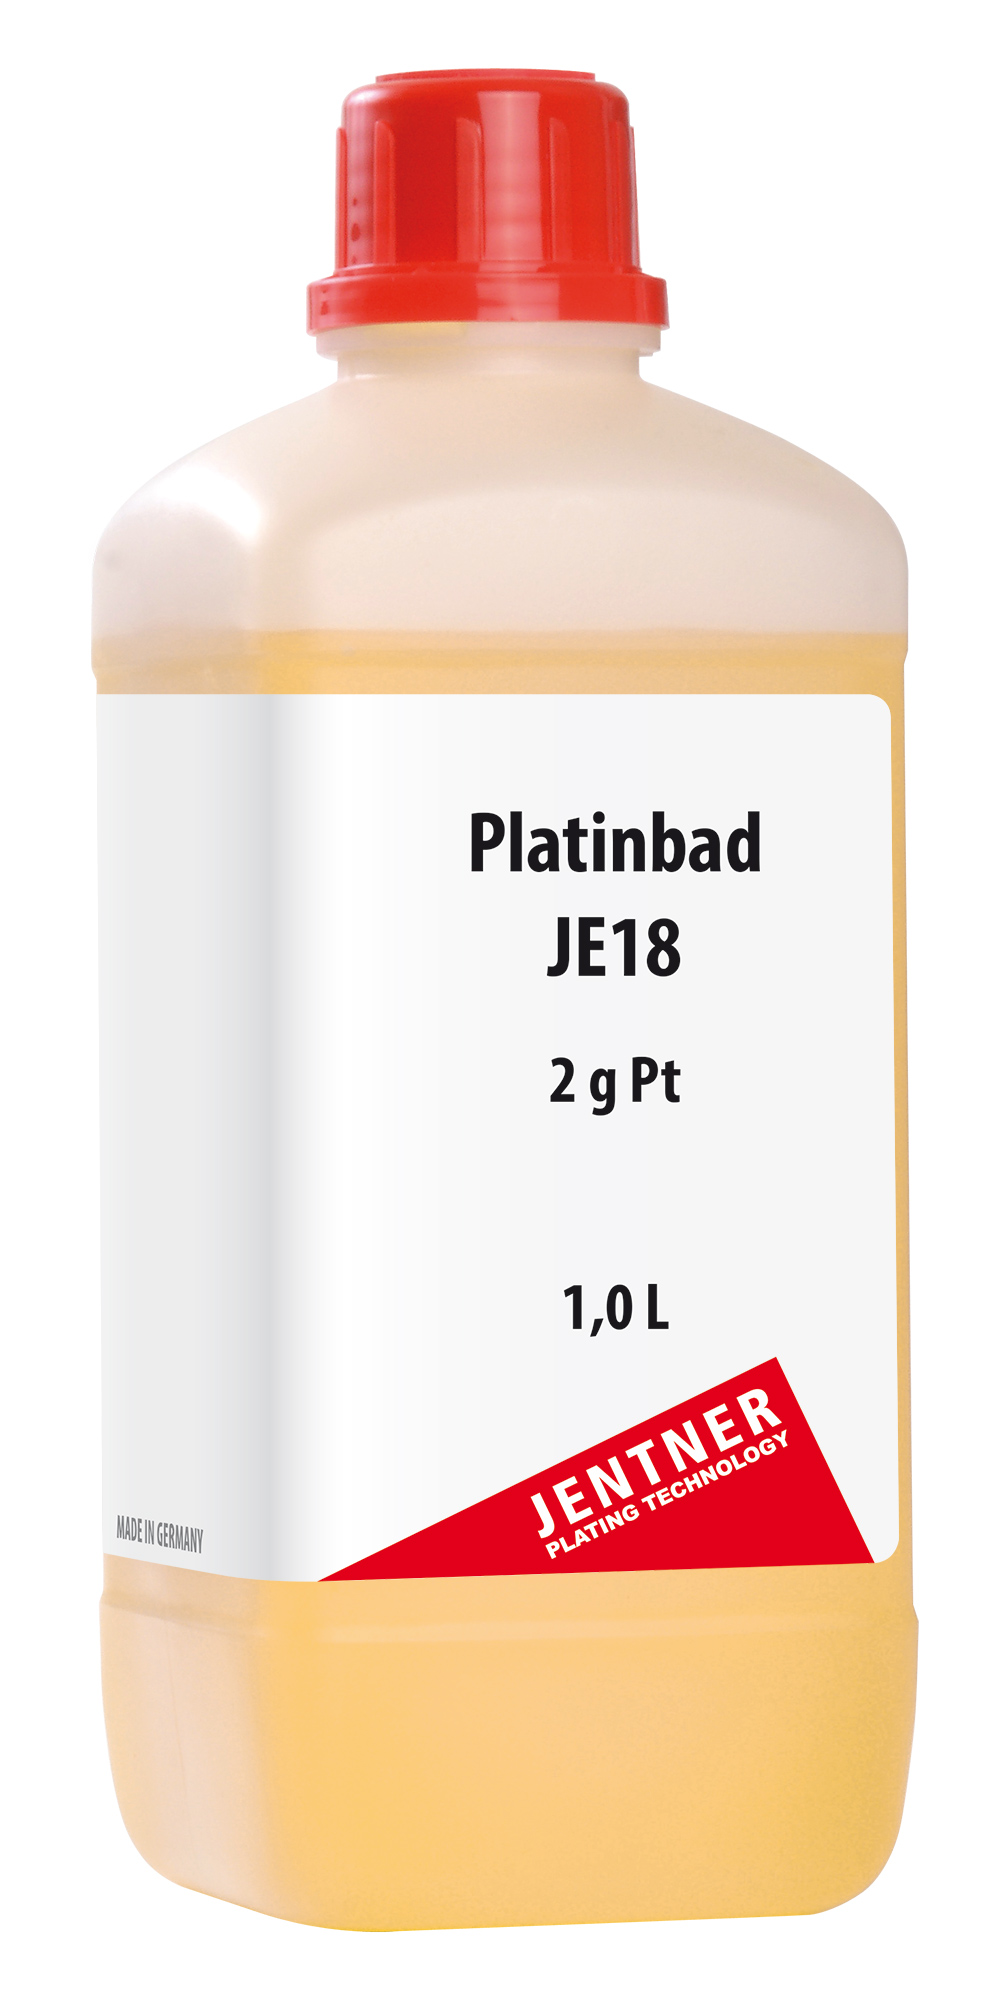 Baño de platino JE18 - 2 g/L Pt